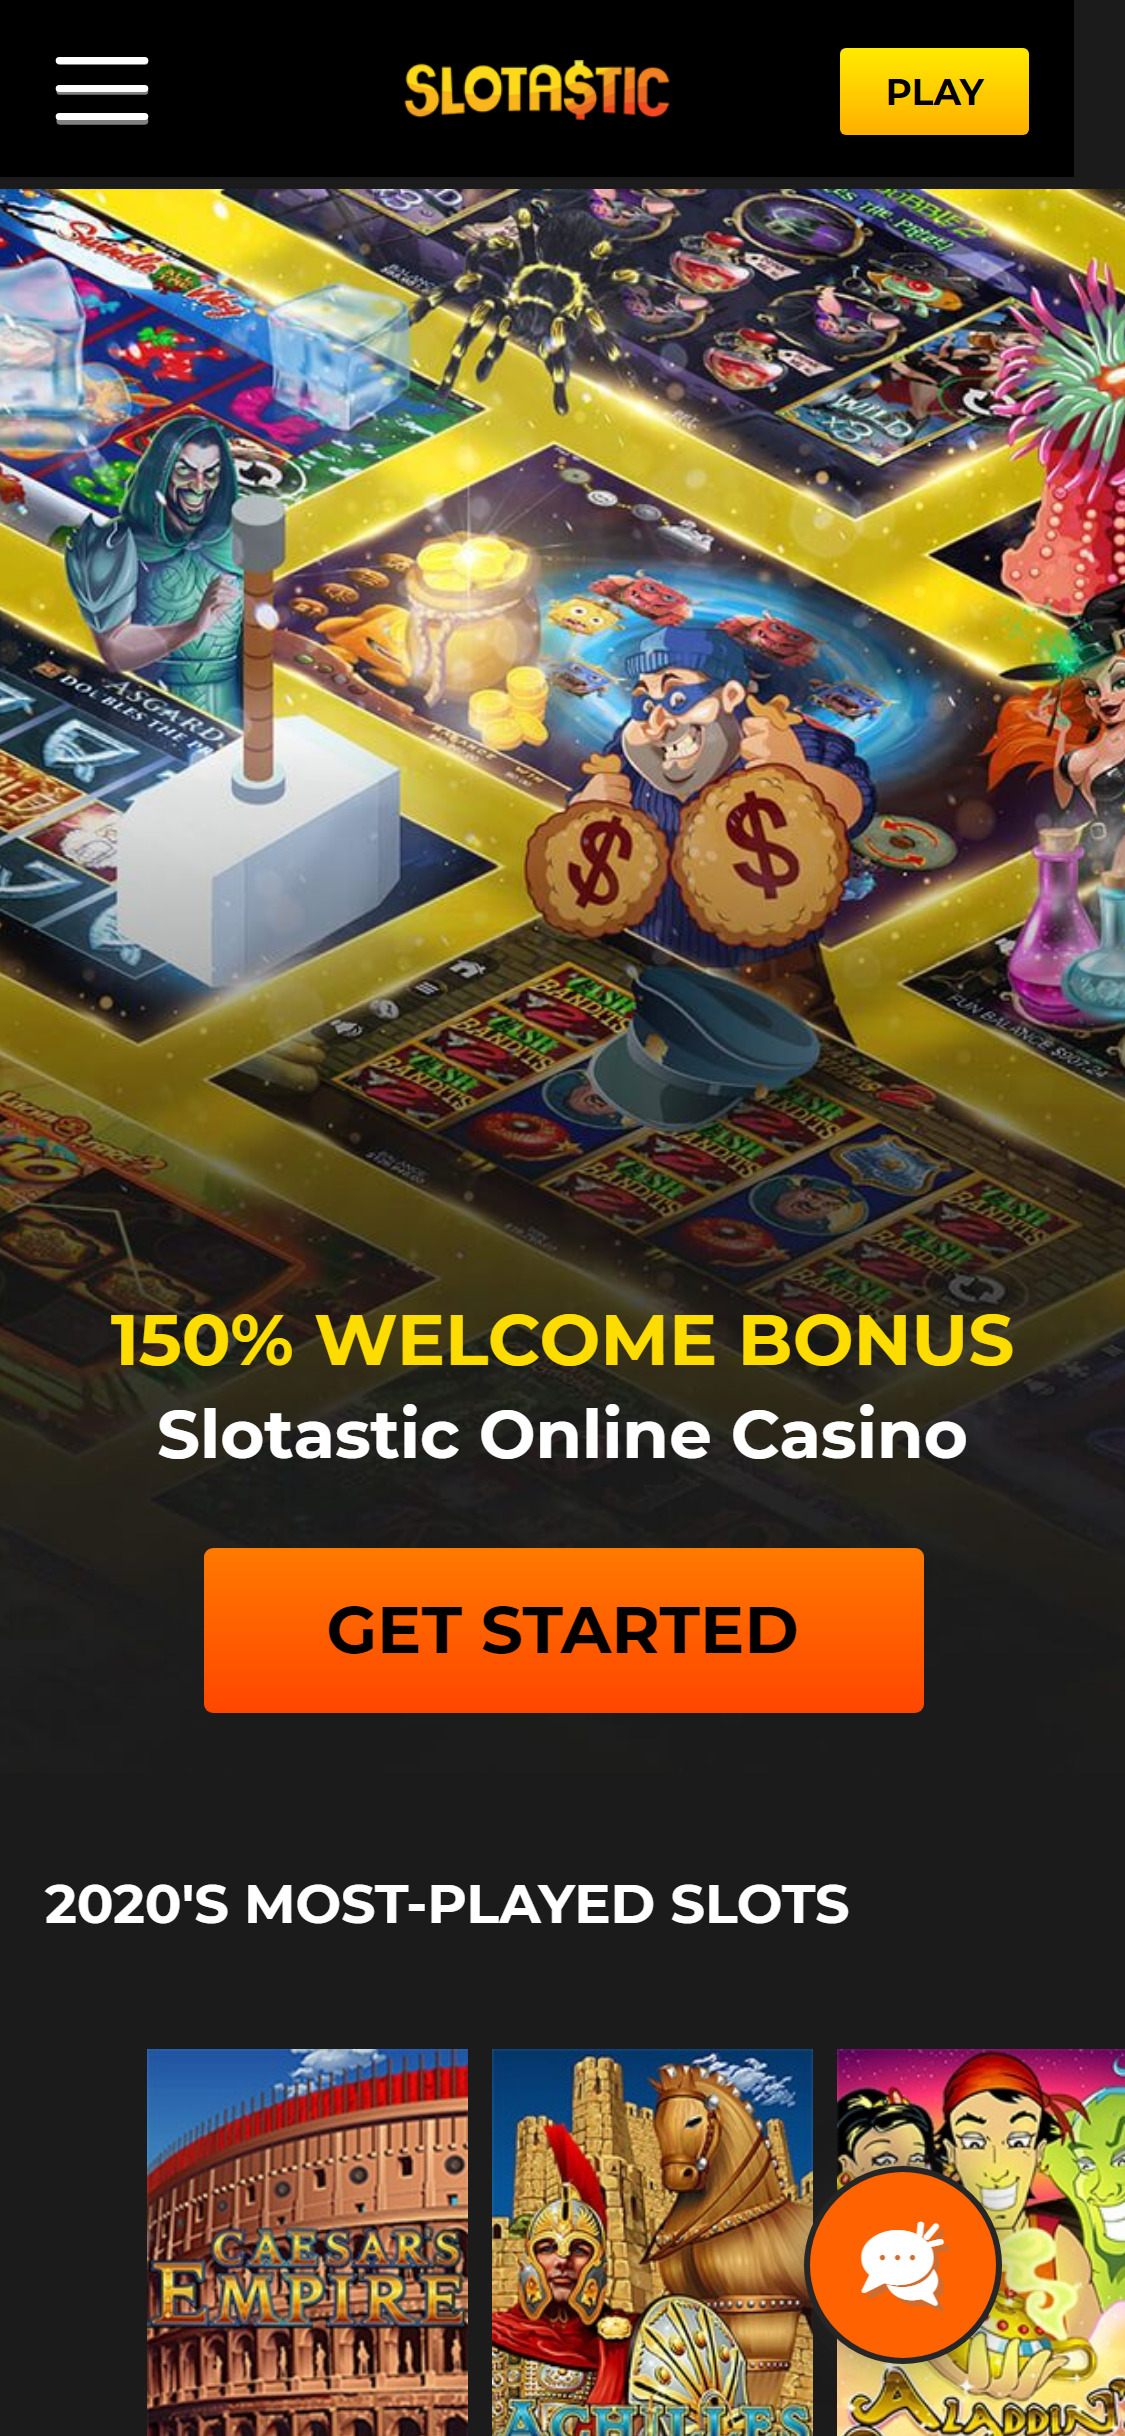 Slotastic Casino Mobile Review